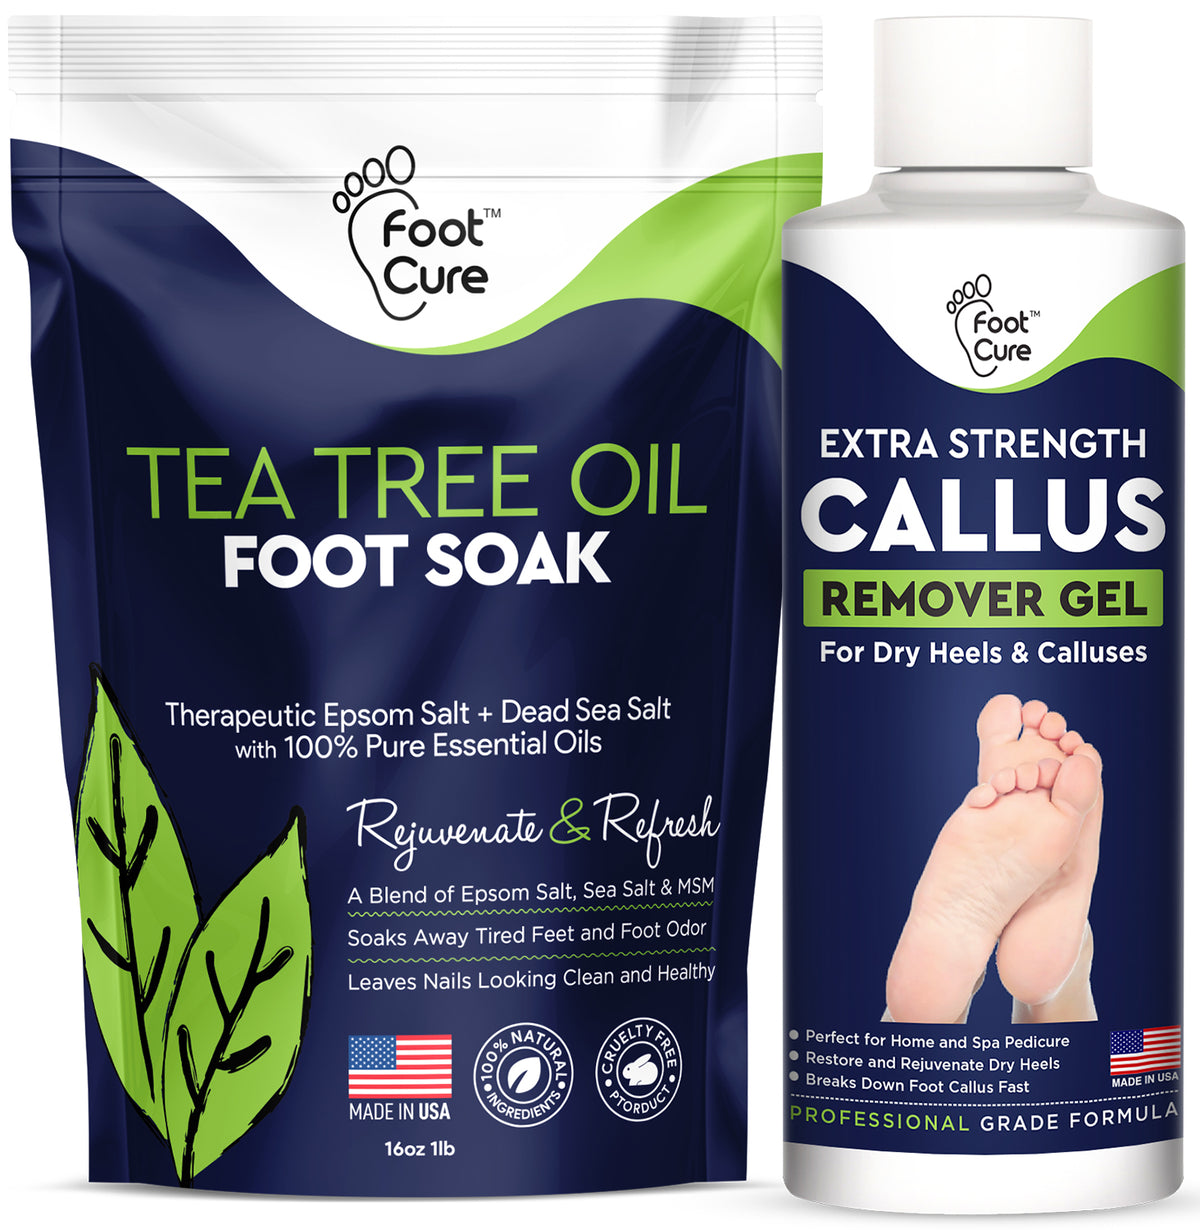 Tea Tree Foot Soak & Callus Remover Gel Kit - Moisturize, Heal, and Restore Dry Cracked Feet, Treat Toenail Fungus, Eliminate Odor - Made in USA